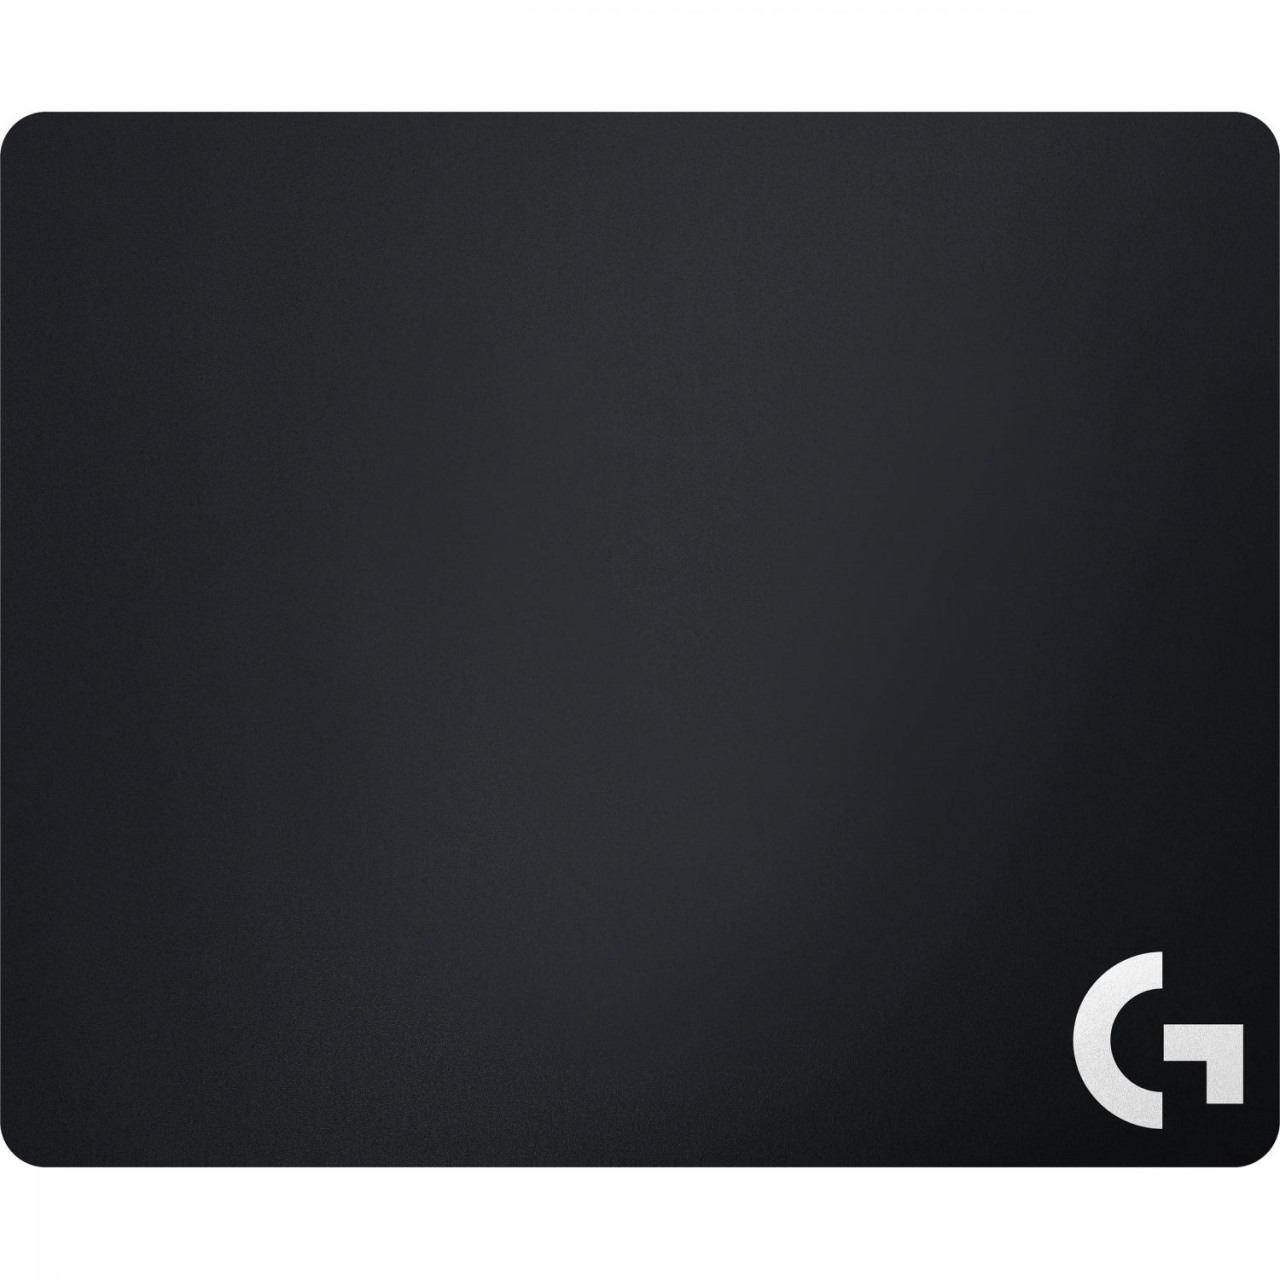 Logitech G440 Gaming Mousepad